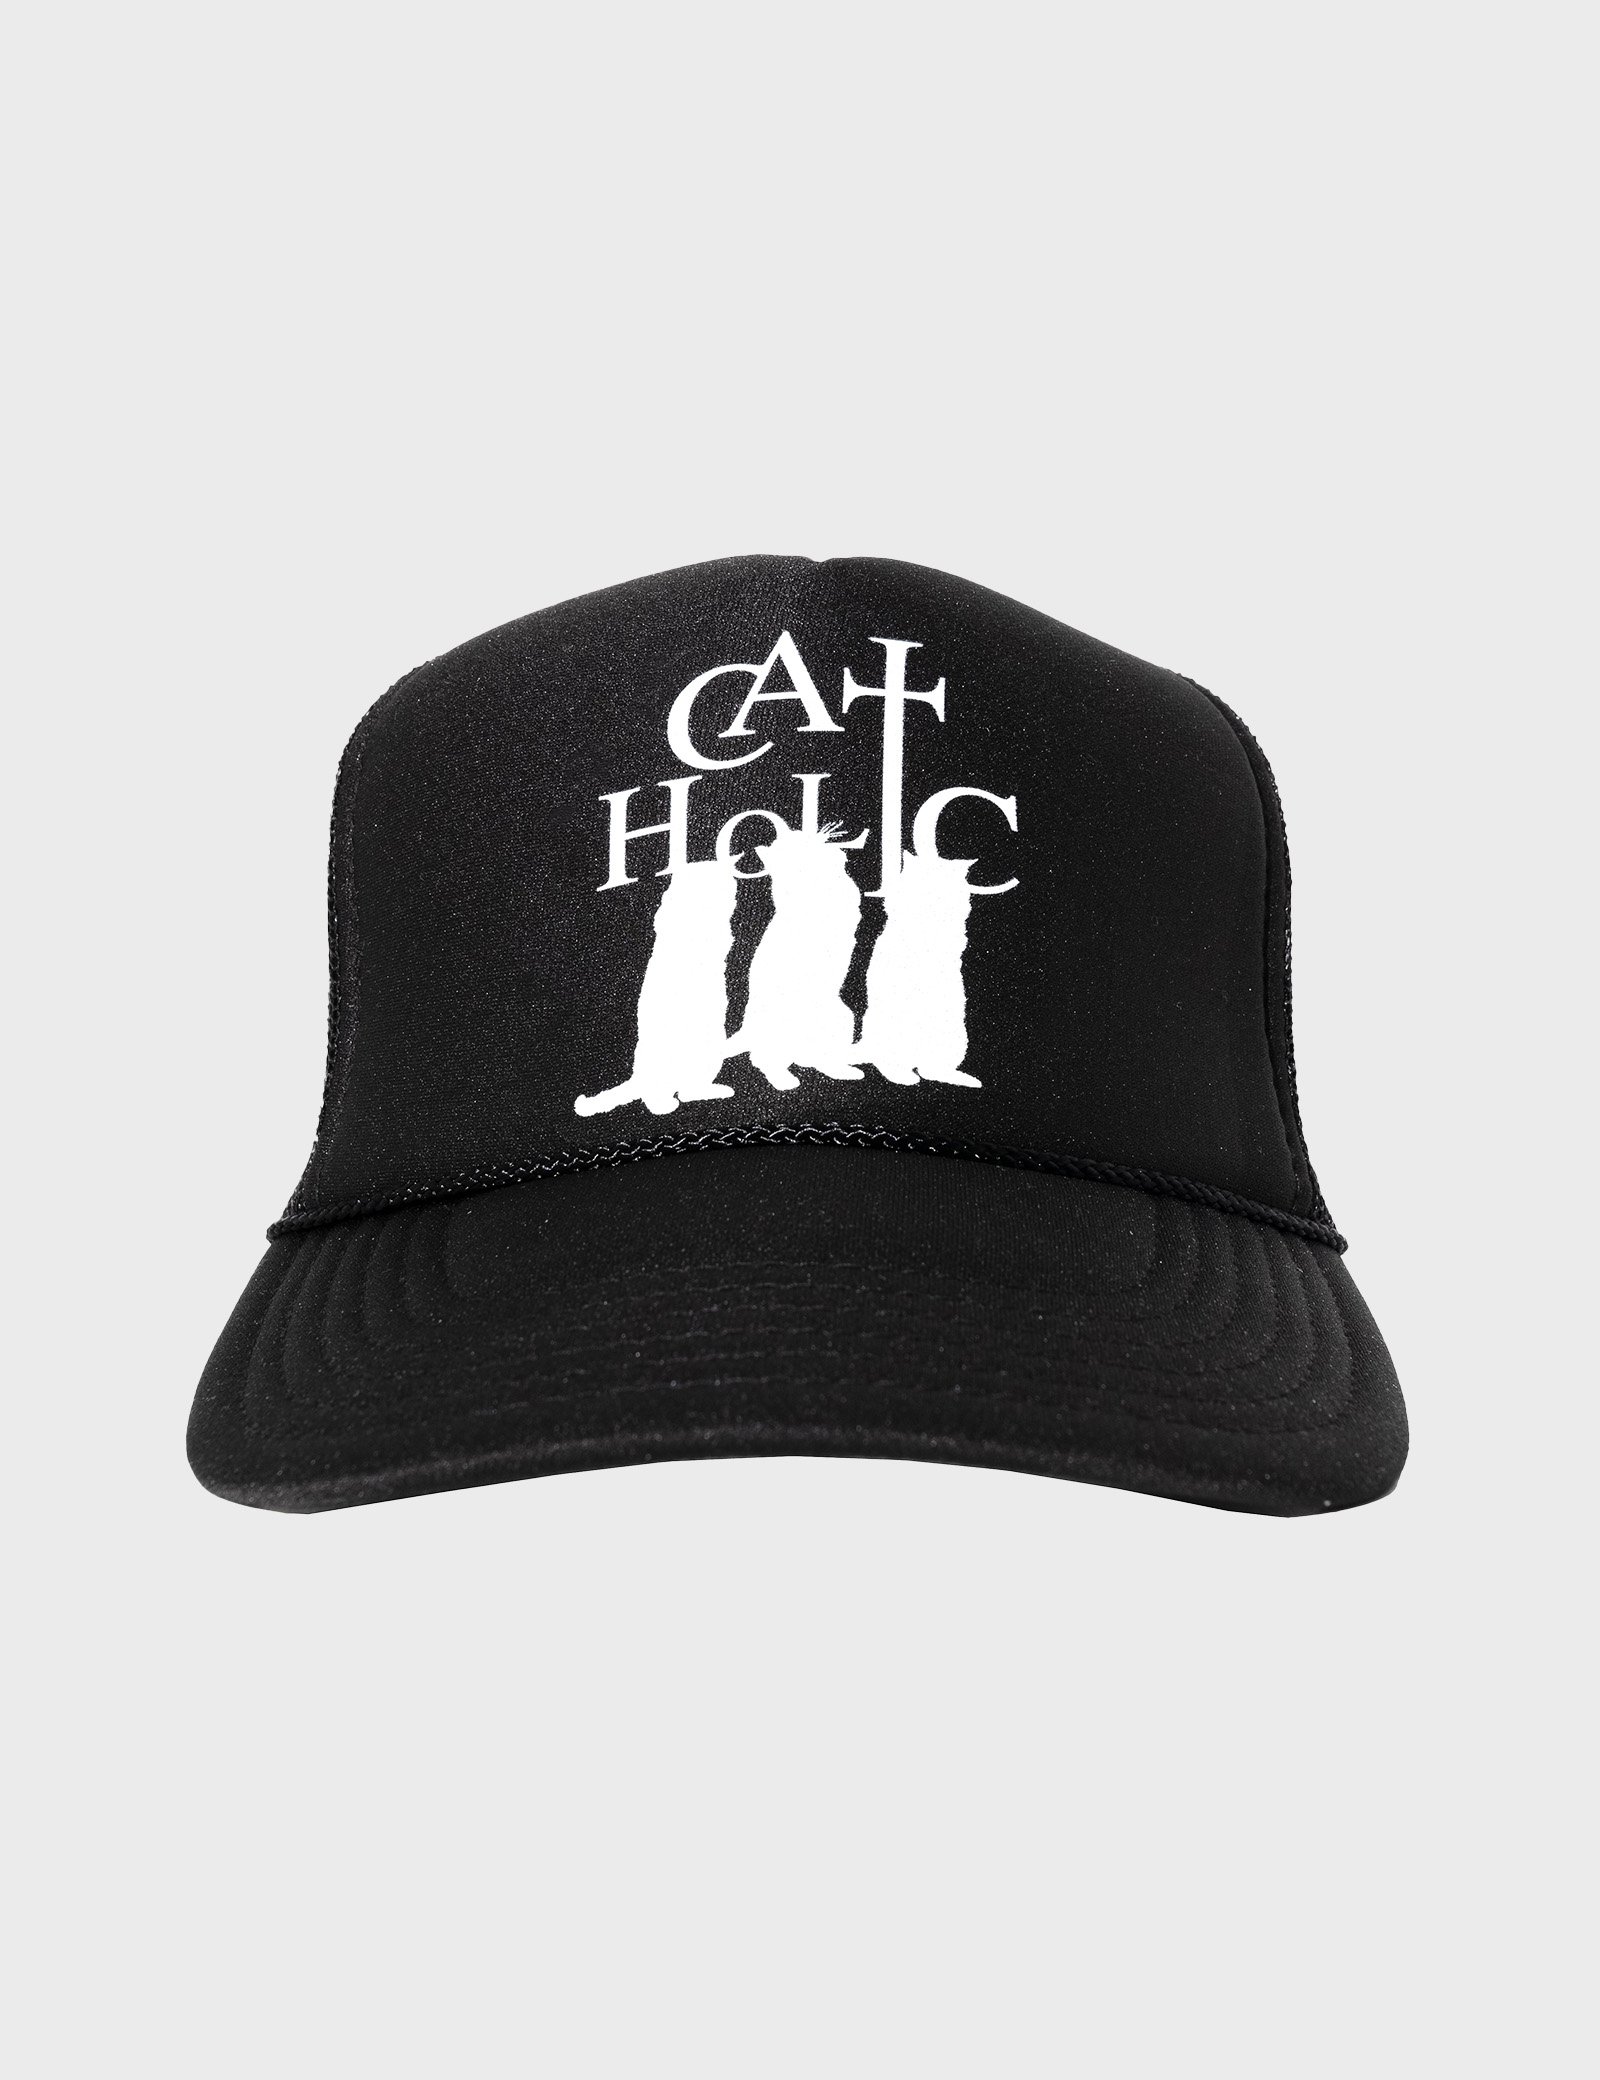 CAT HOLIC Trucker Cap